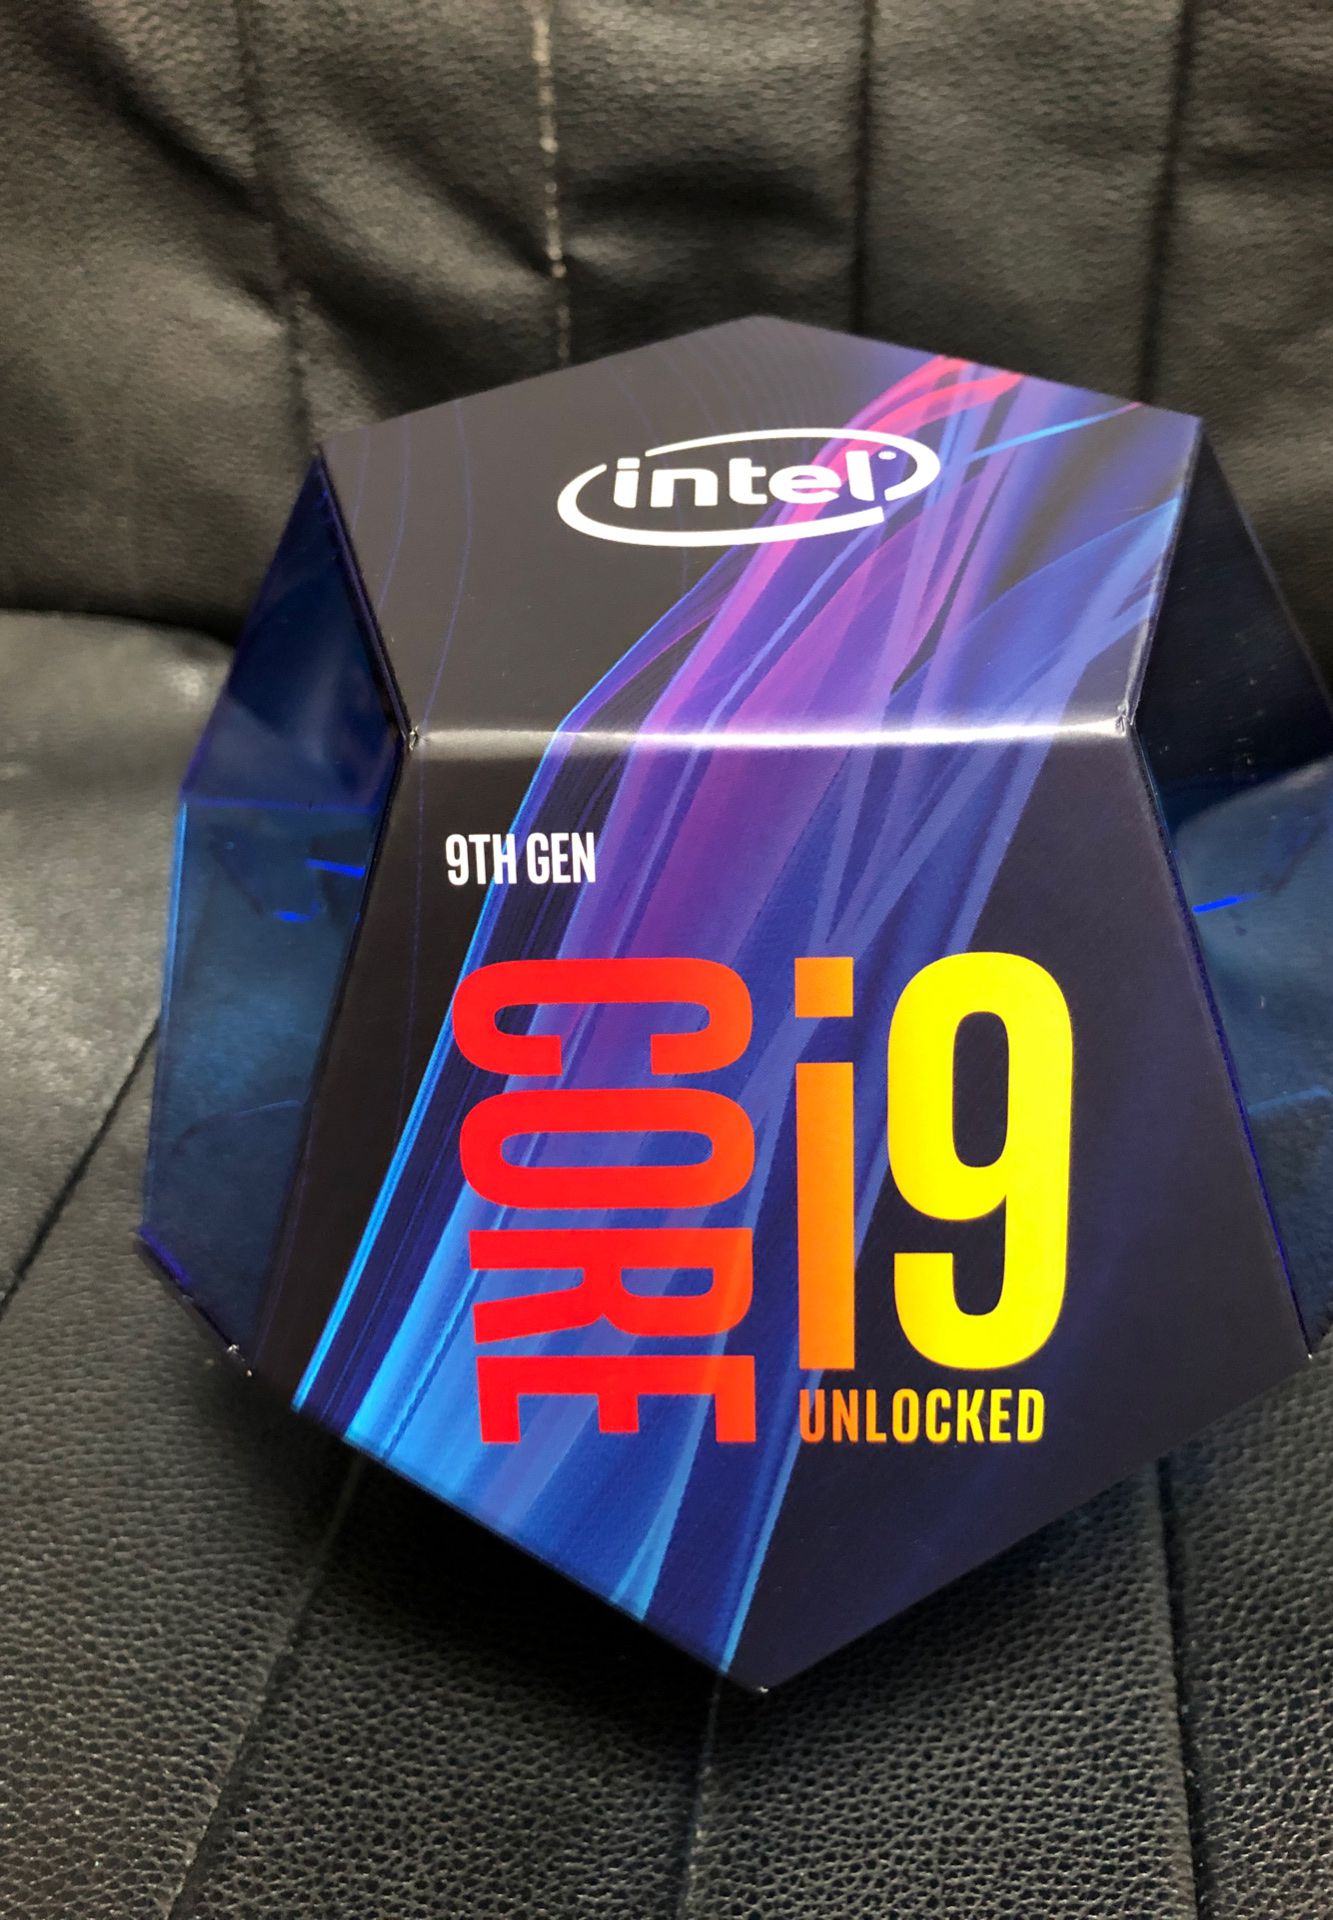 Intel core i9 processor